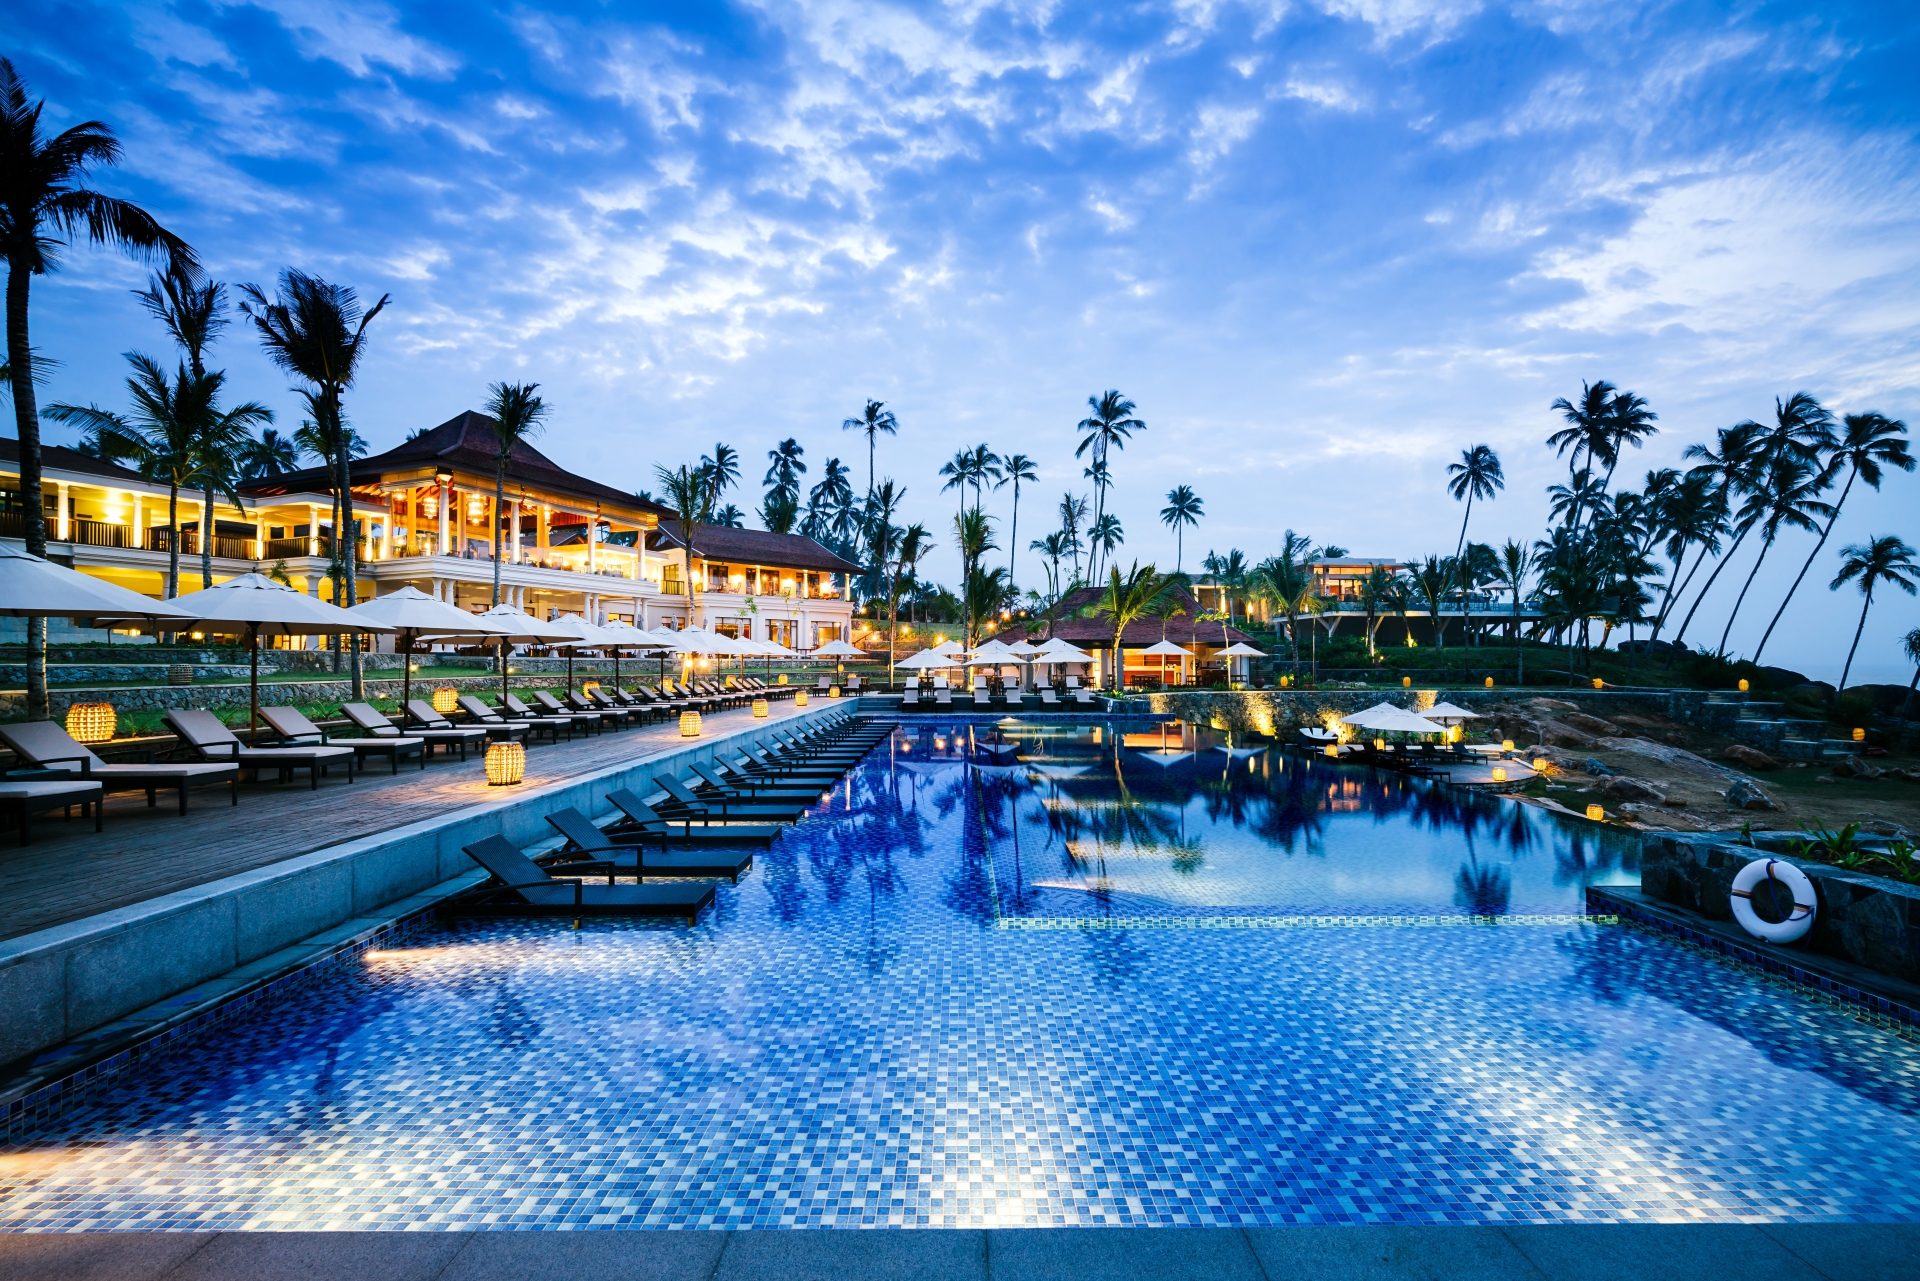 Pool by night - Anantara Peace Haven Tangalle Resort